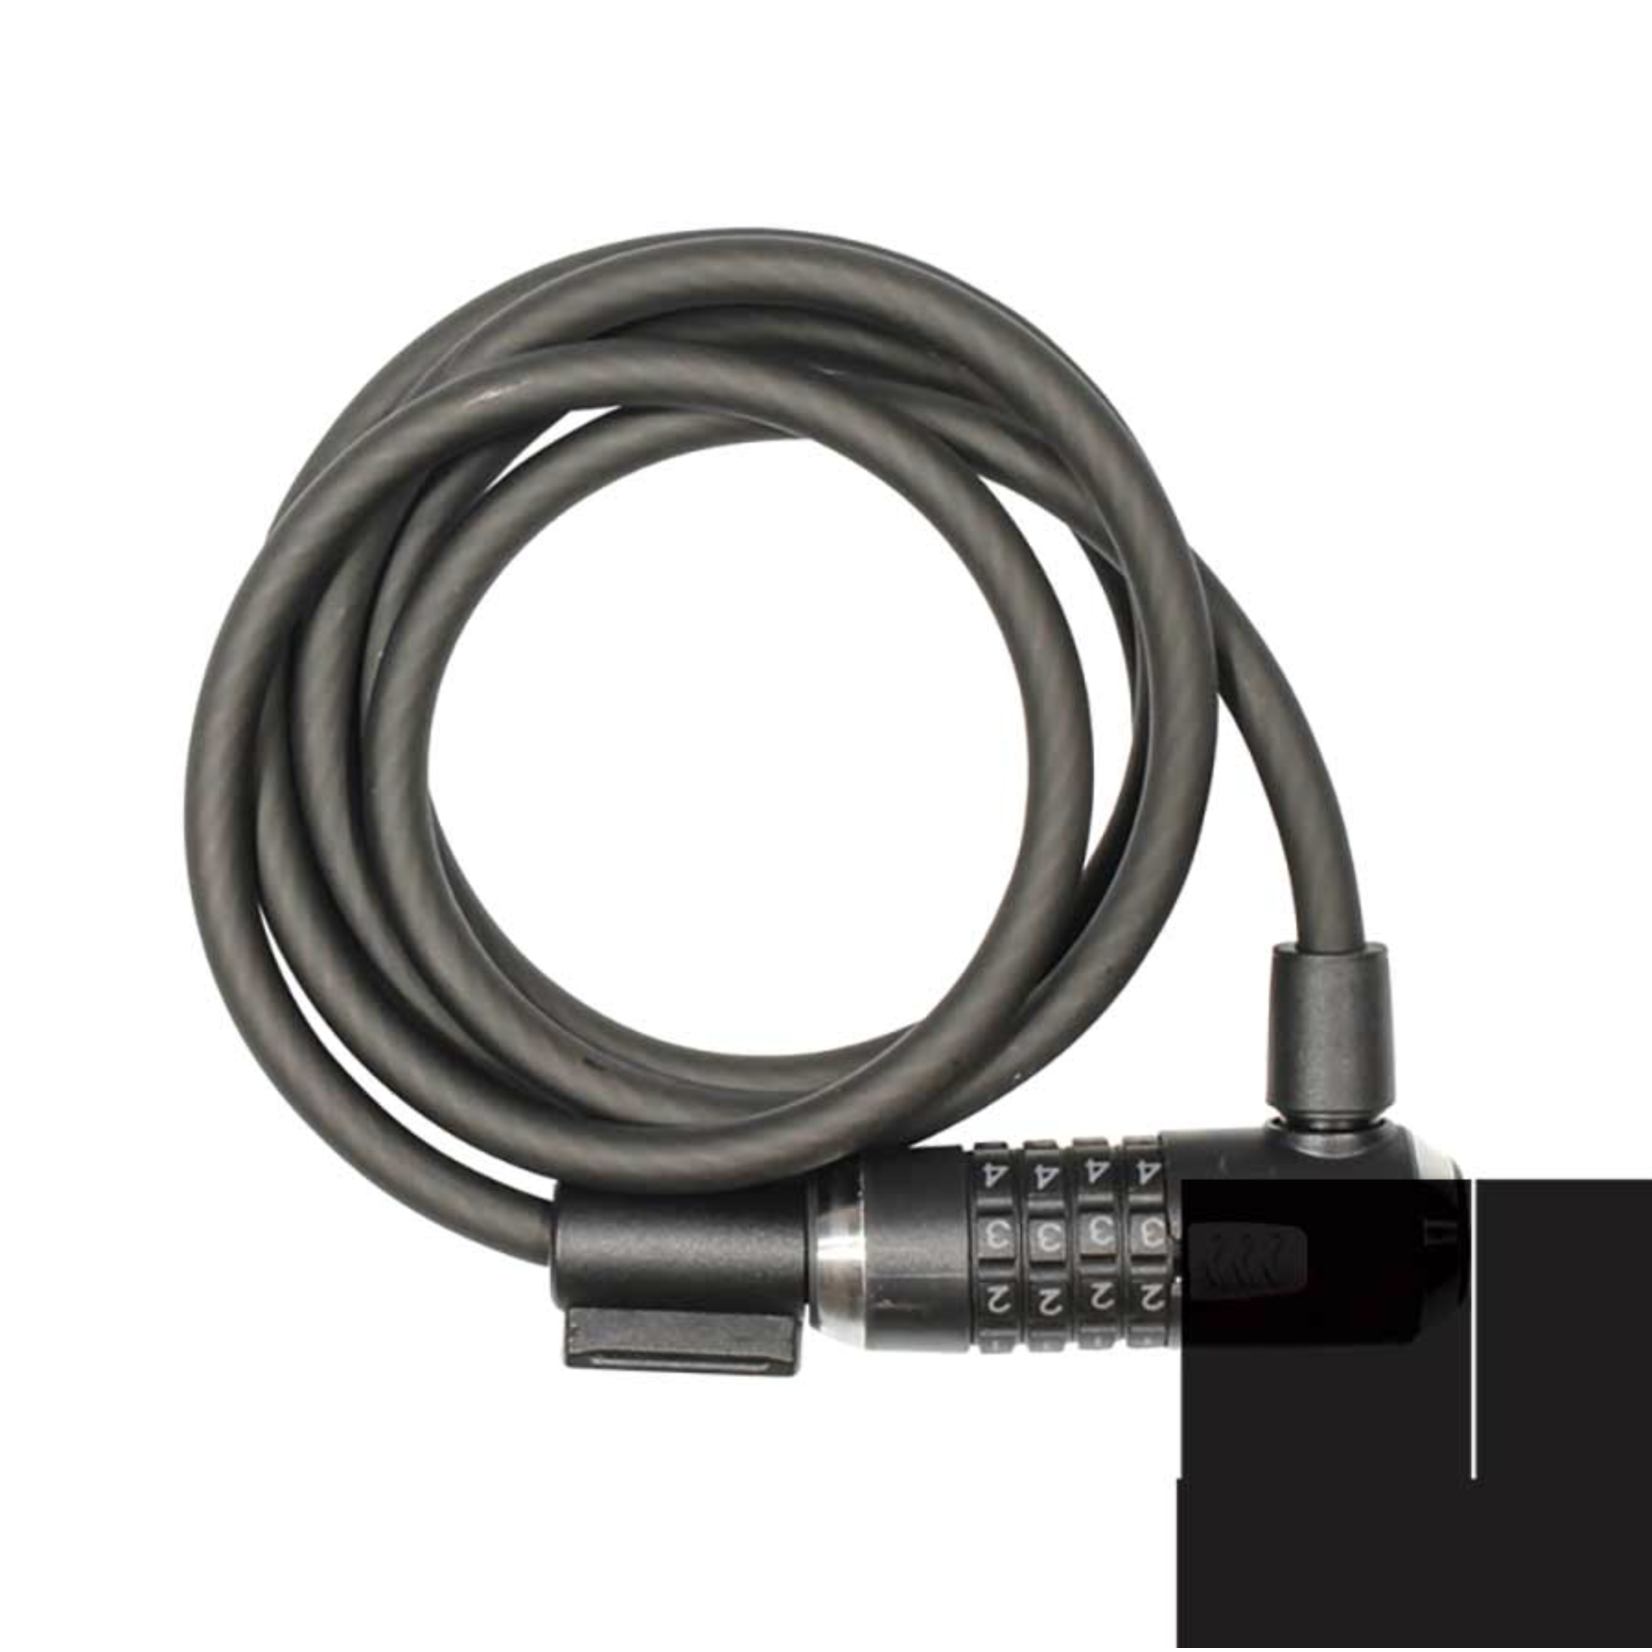 Kryptonite -  KryptoFlex 1230, Cable lock, Combination, 12mm, 300cm, 9.8', Black